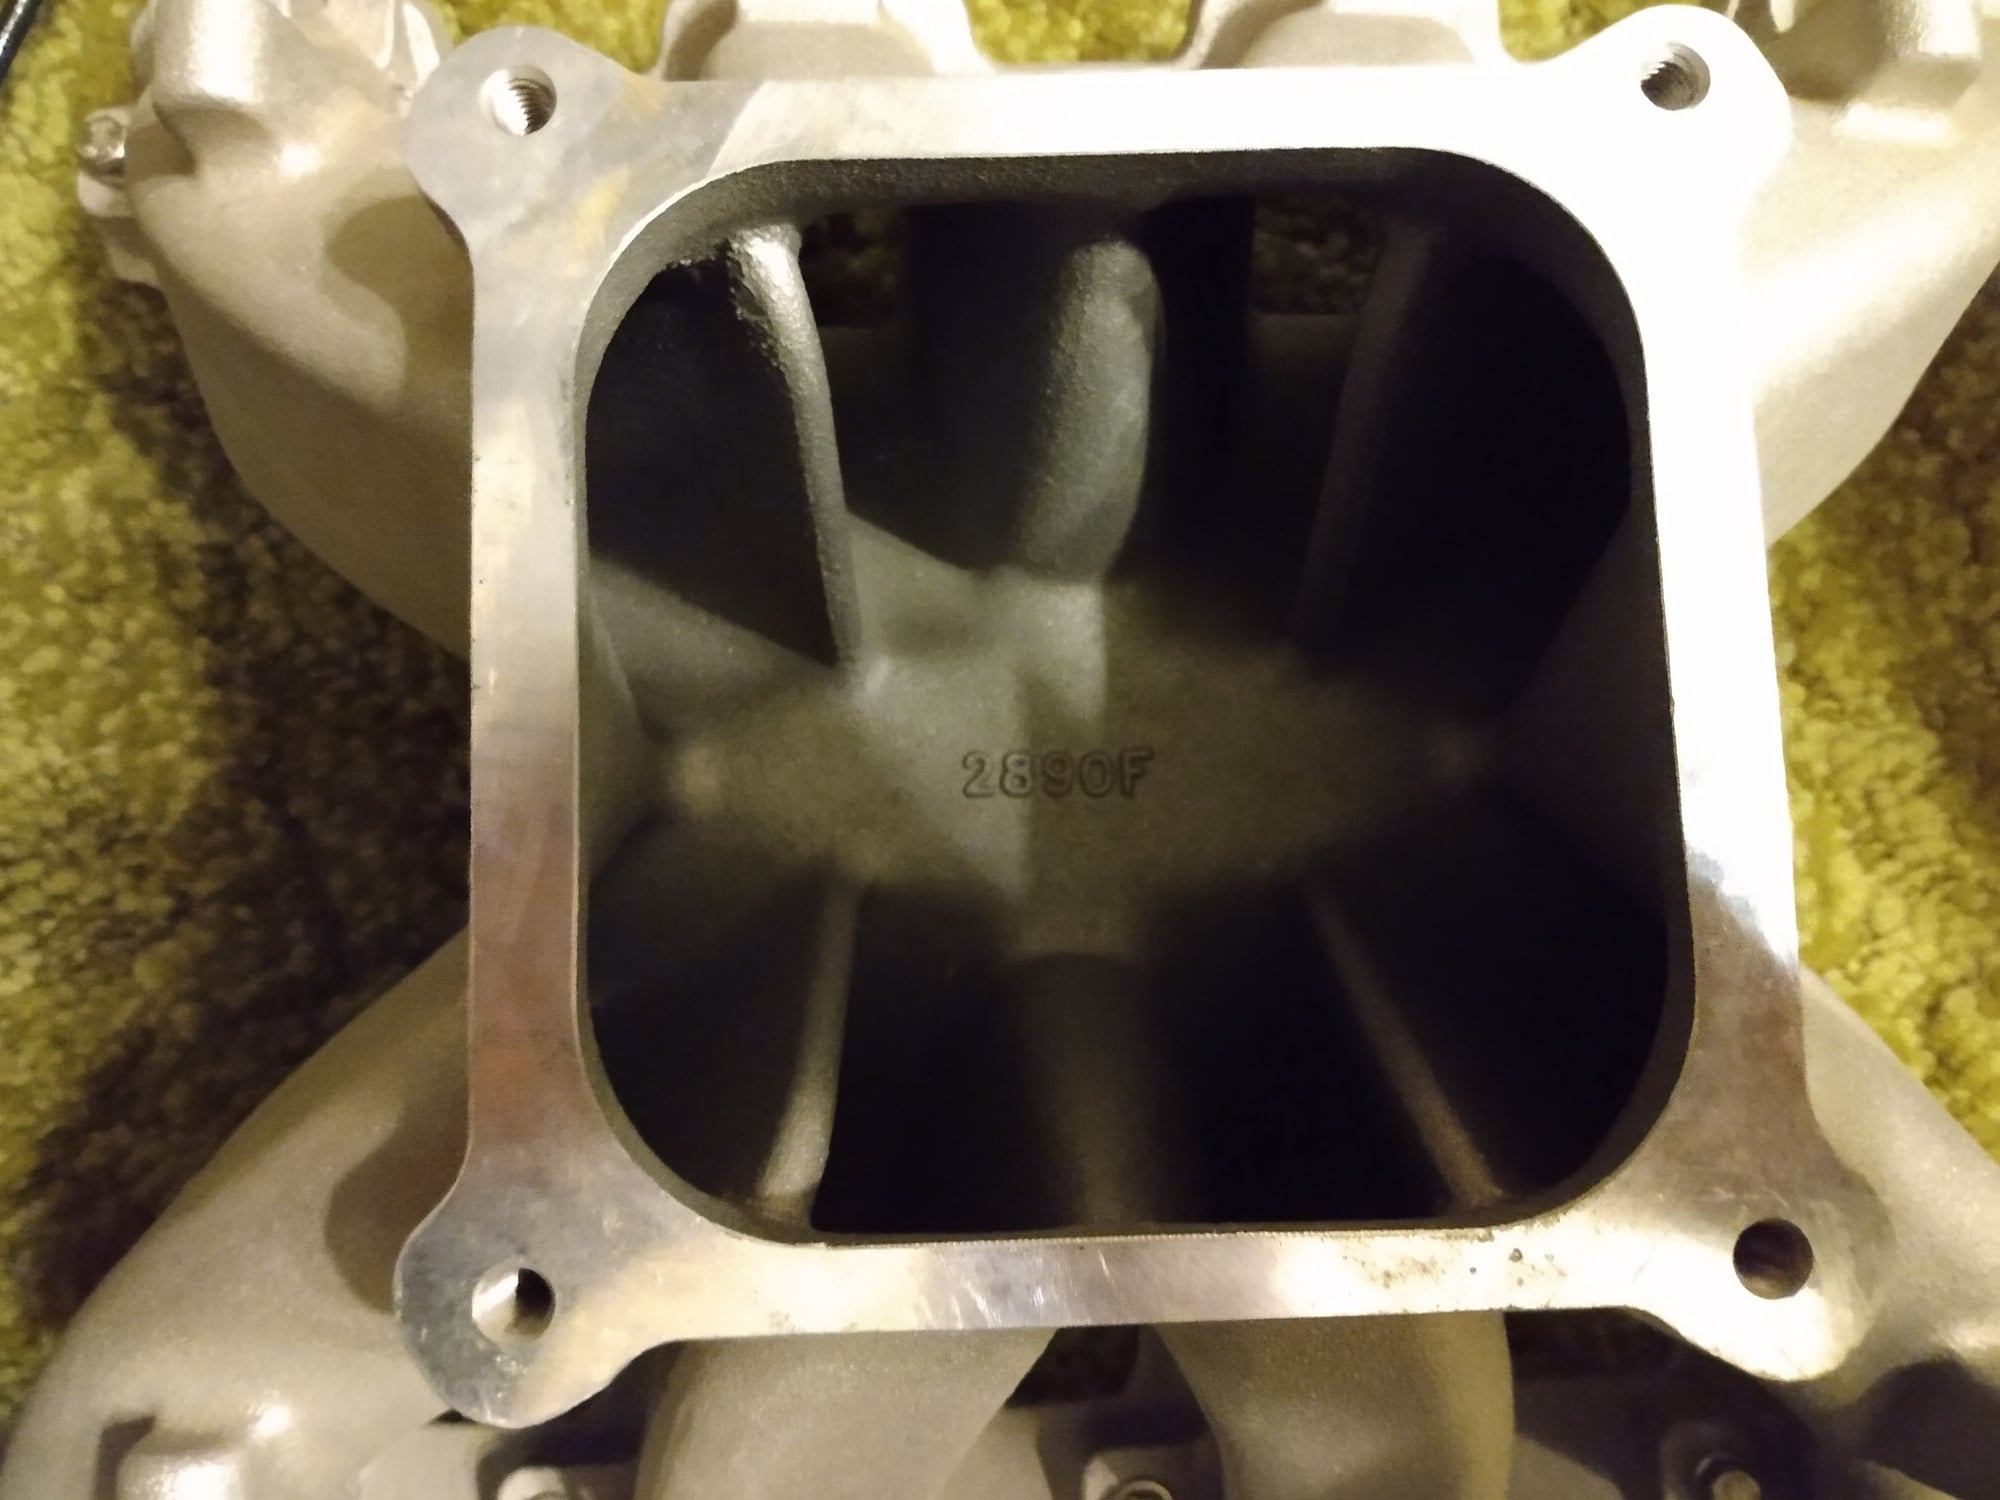 Engine - Intake/Fuel - Selling NEW Edelbrock LS7 Super Vic carbureted intake manifold - New - 0  All Models - Wichita Falls, TX 76308, United States